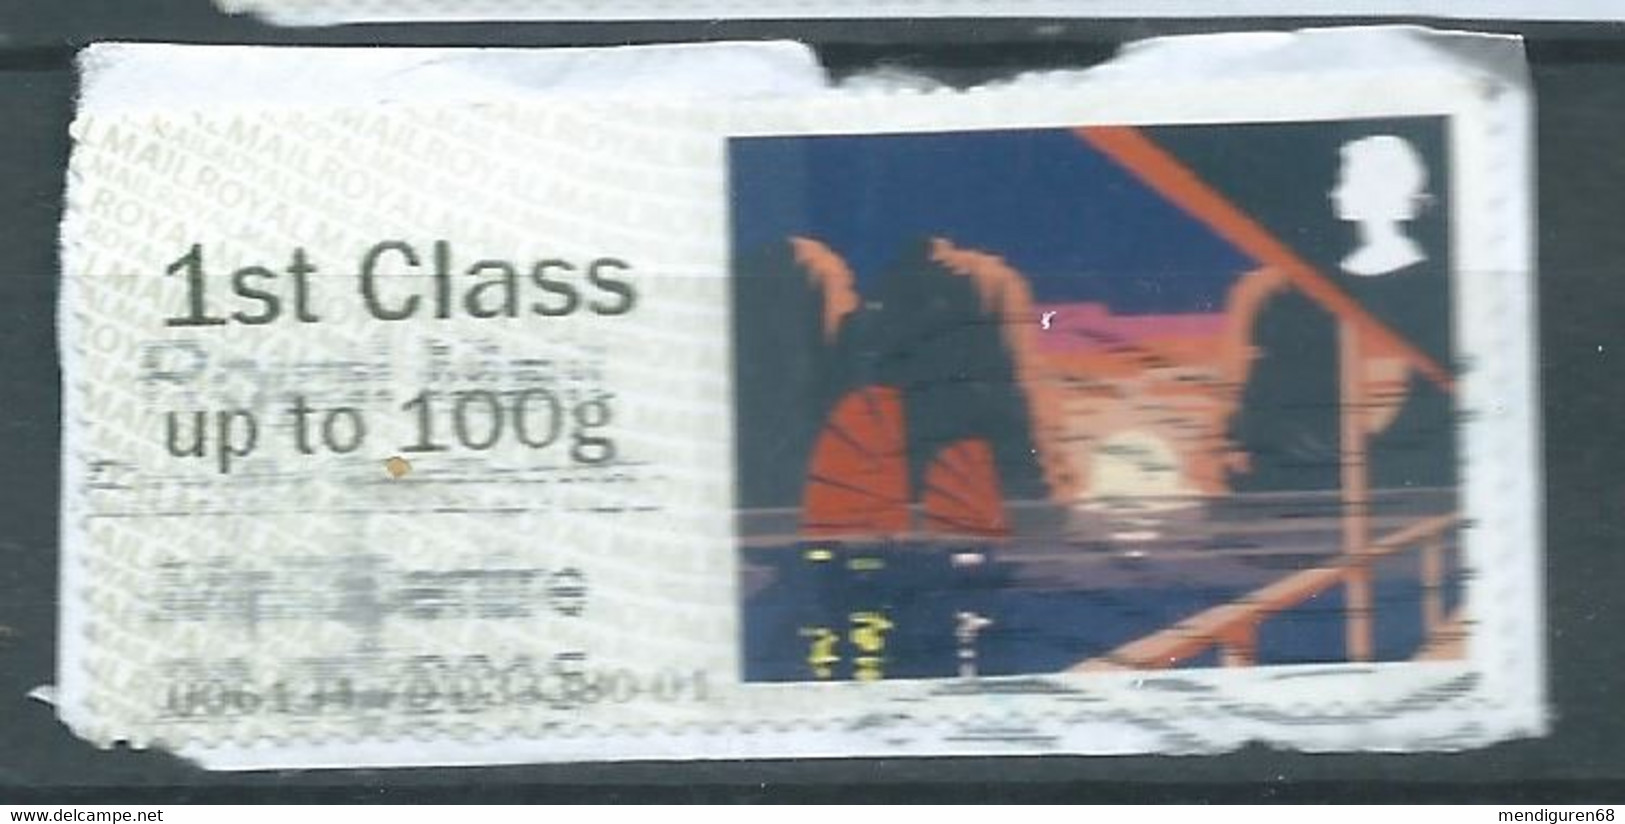 GROSBRITANNIEN GRANDE BRETAGNE GB 2015 POST&GO SEA TRAVEL:HA LONG BAY 1ST CLASS Up To 100g PAPER SG FS134 MI AT96 YT D95 - Post & Go Stamps